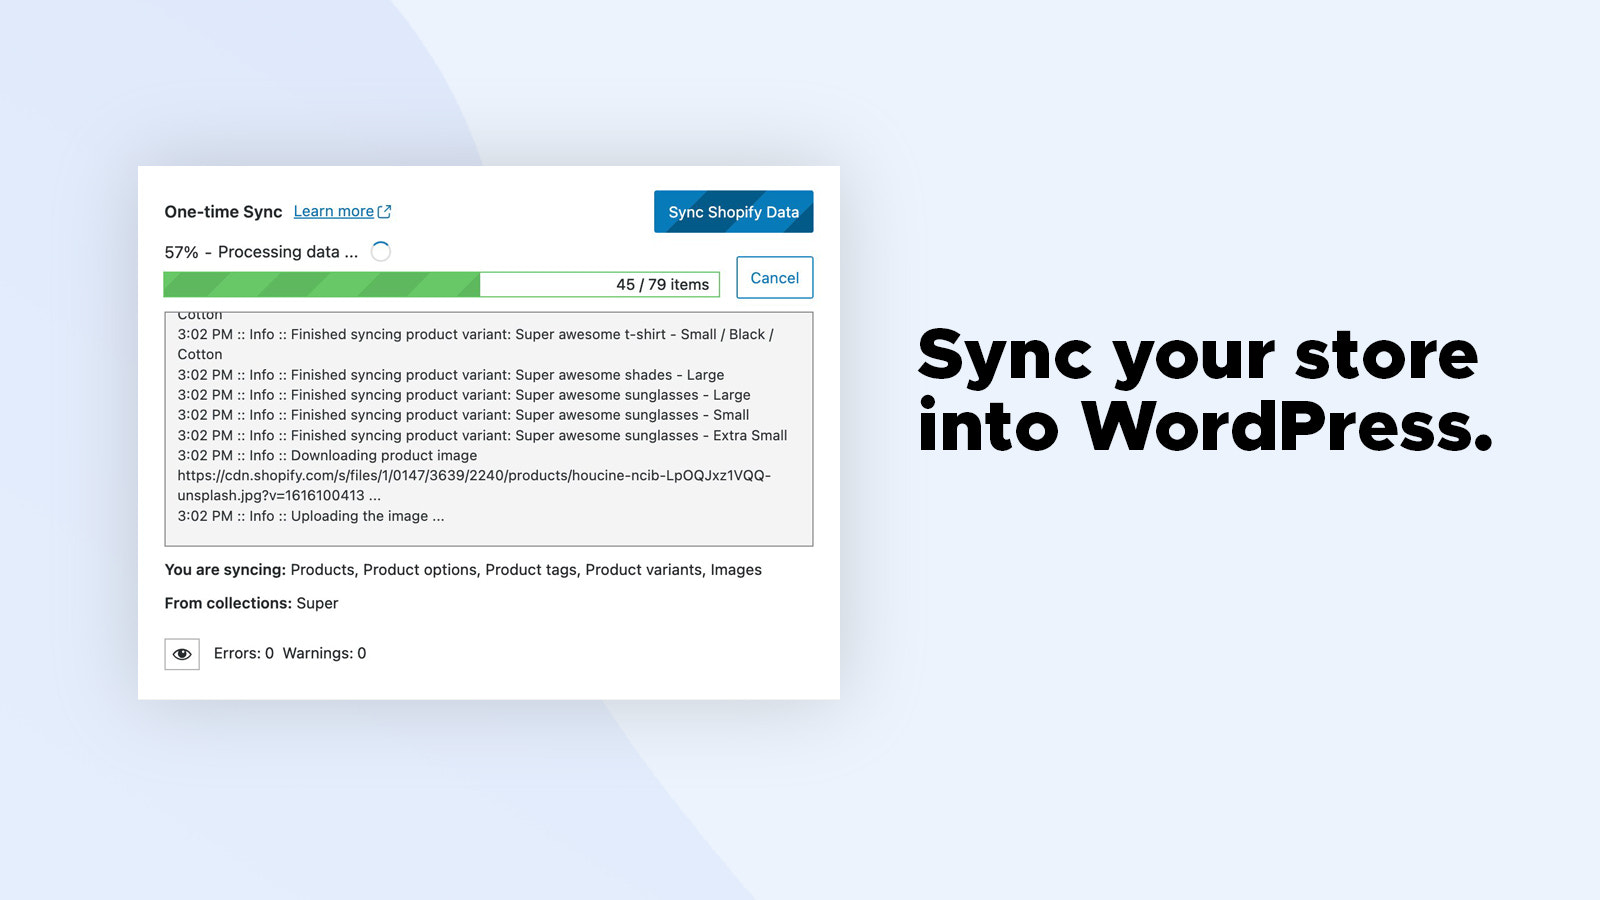 Synkronisera din butik till WordPress